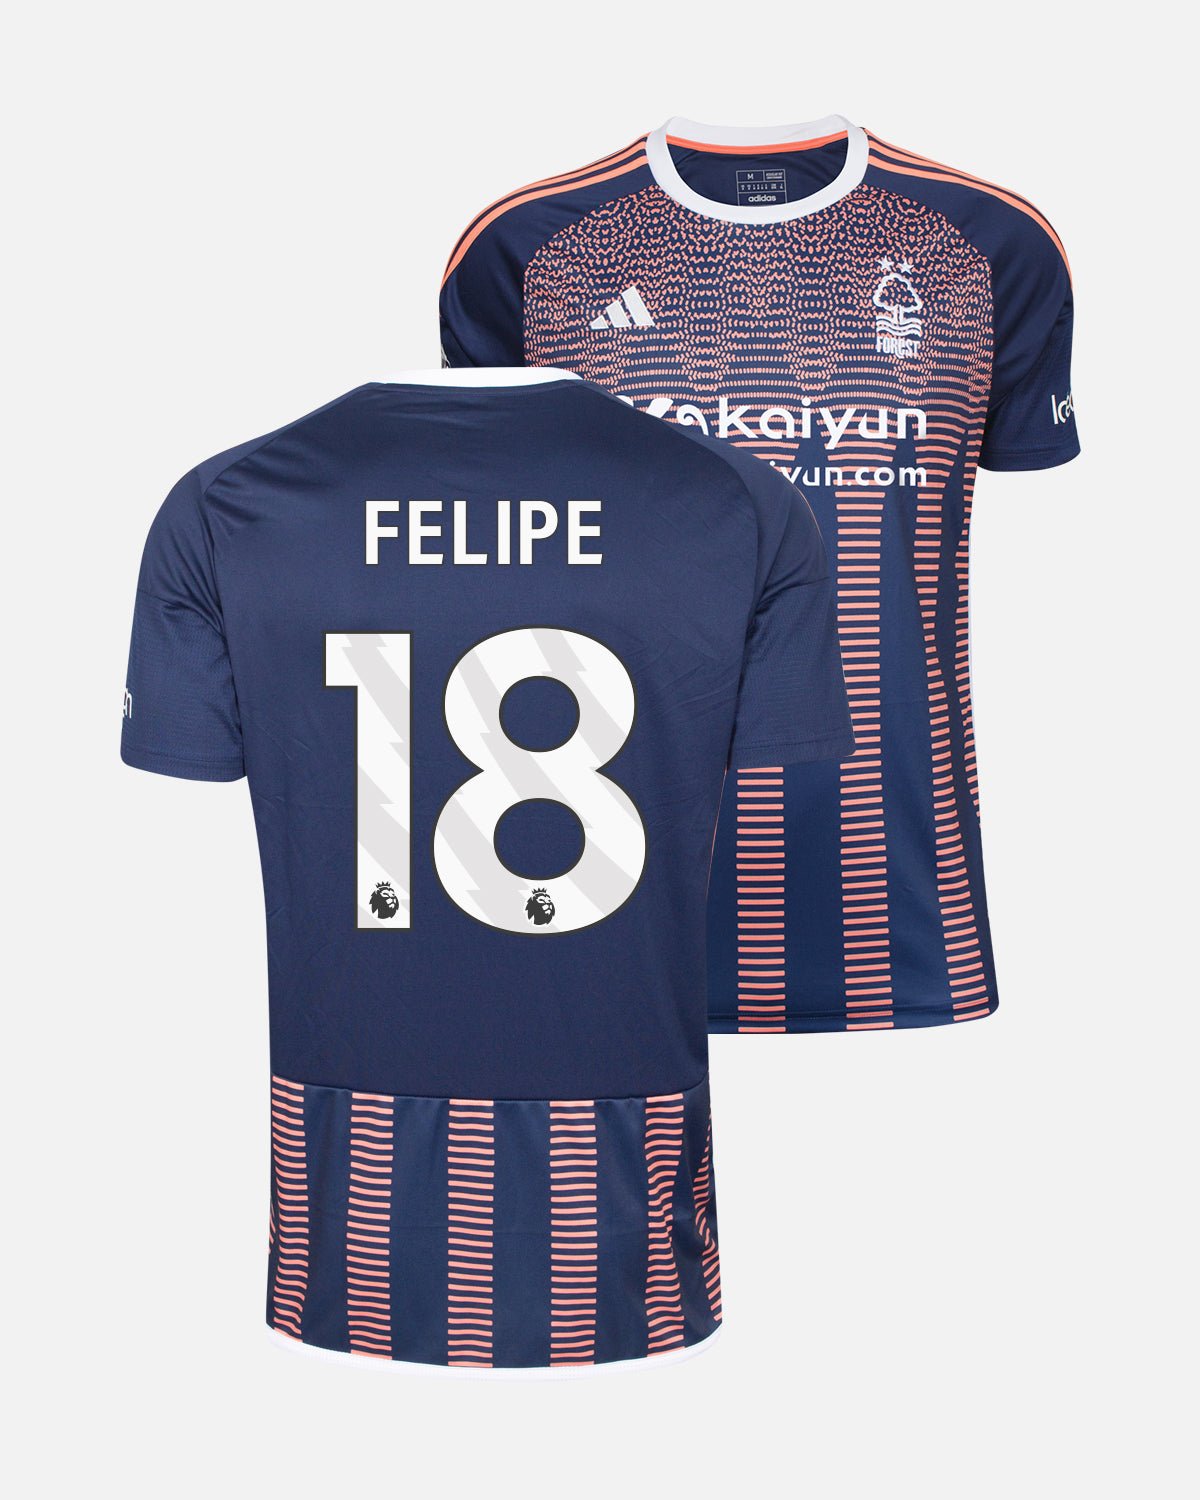 NFFC Third Shirt 23-24 - Felipe 18 - Nottingham Forest FC